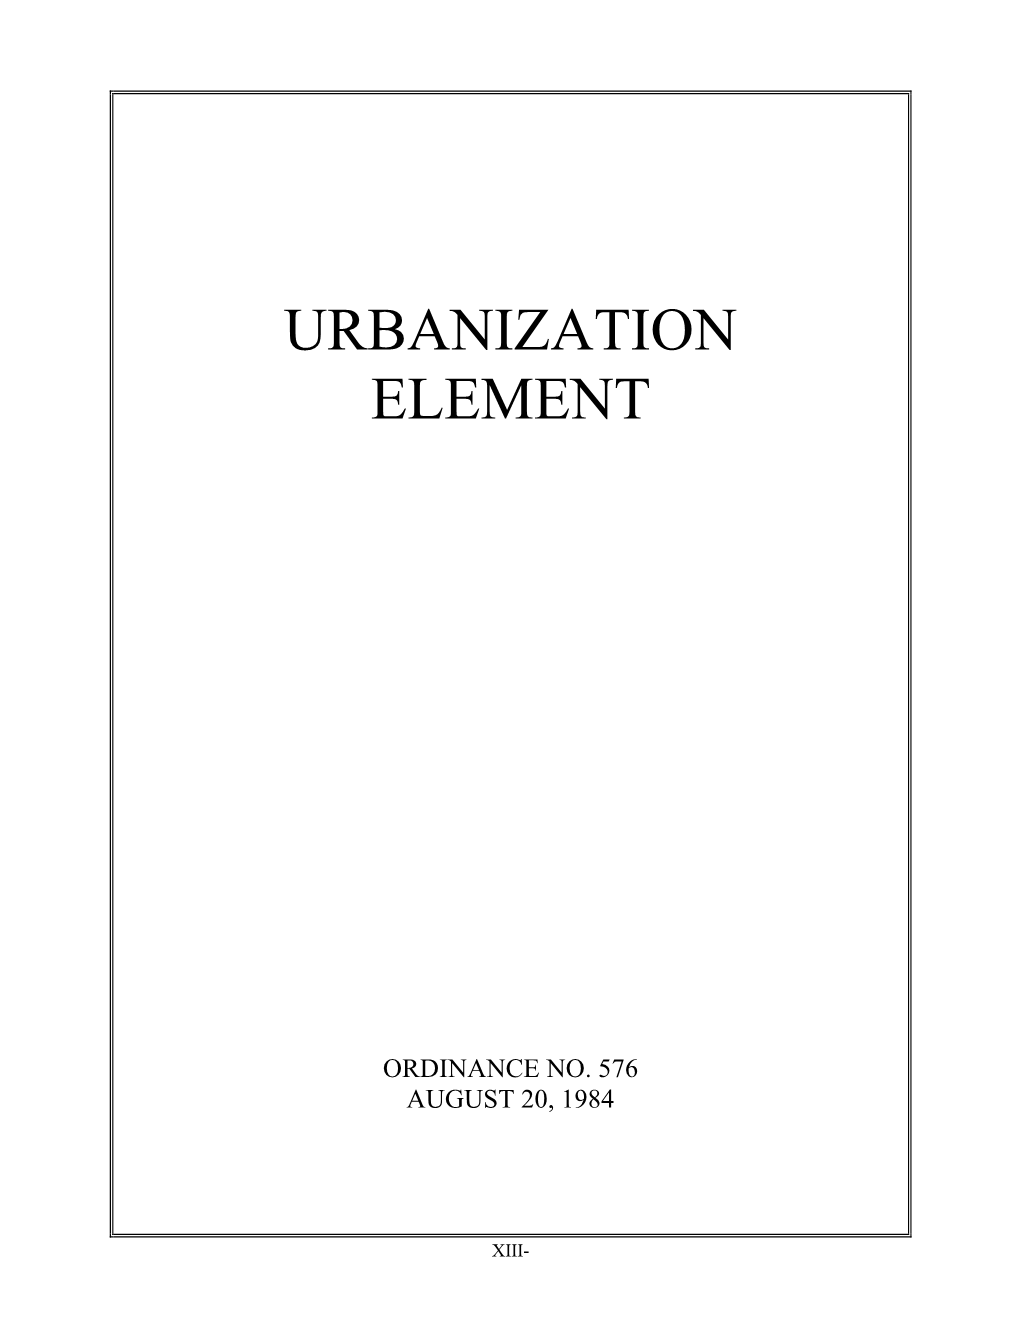 Urbanization Element